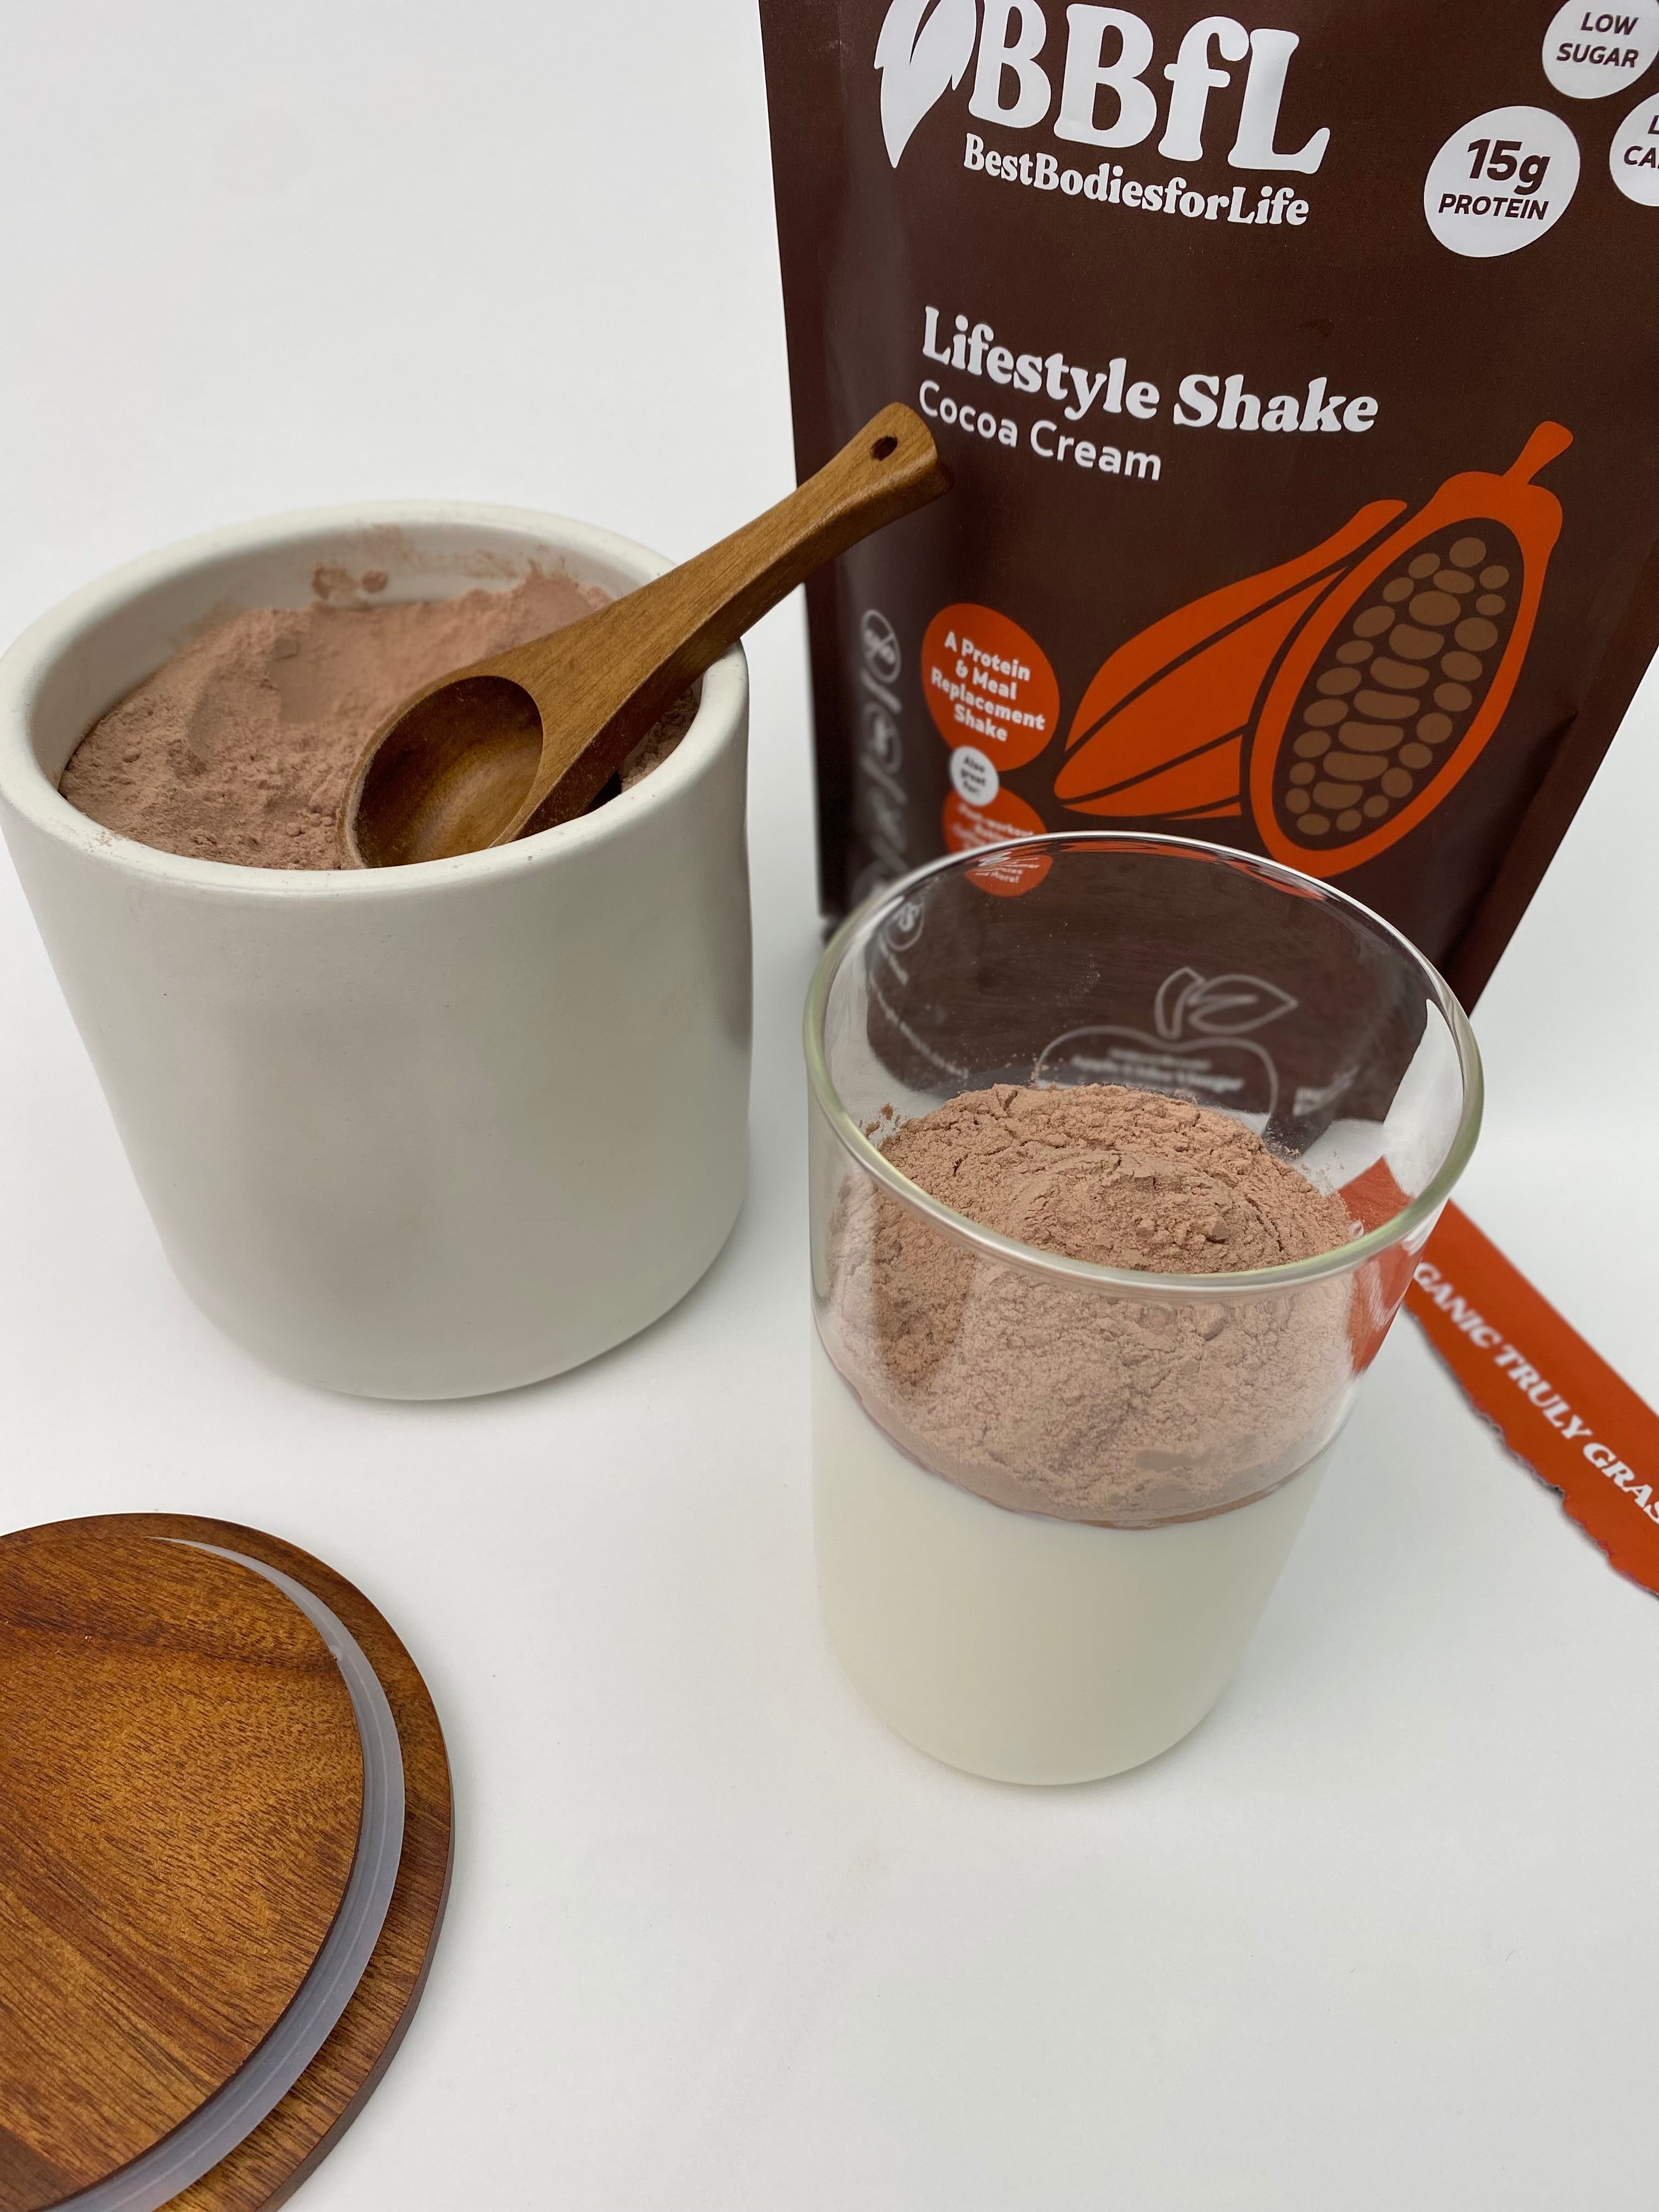 BBfL Cocoa Cream Life Style Shake (Organic Whey)